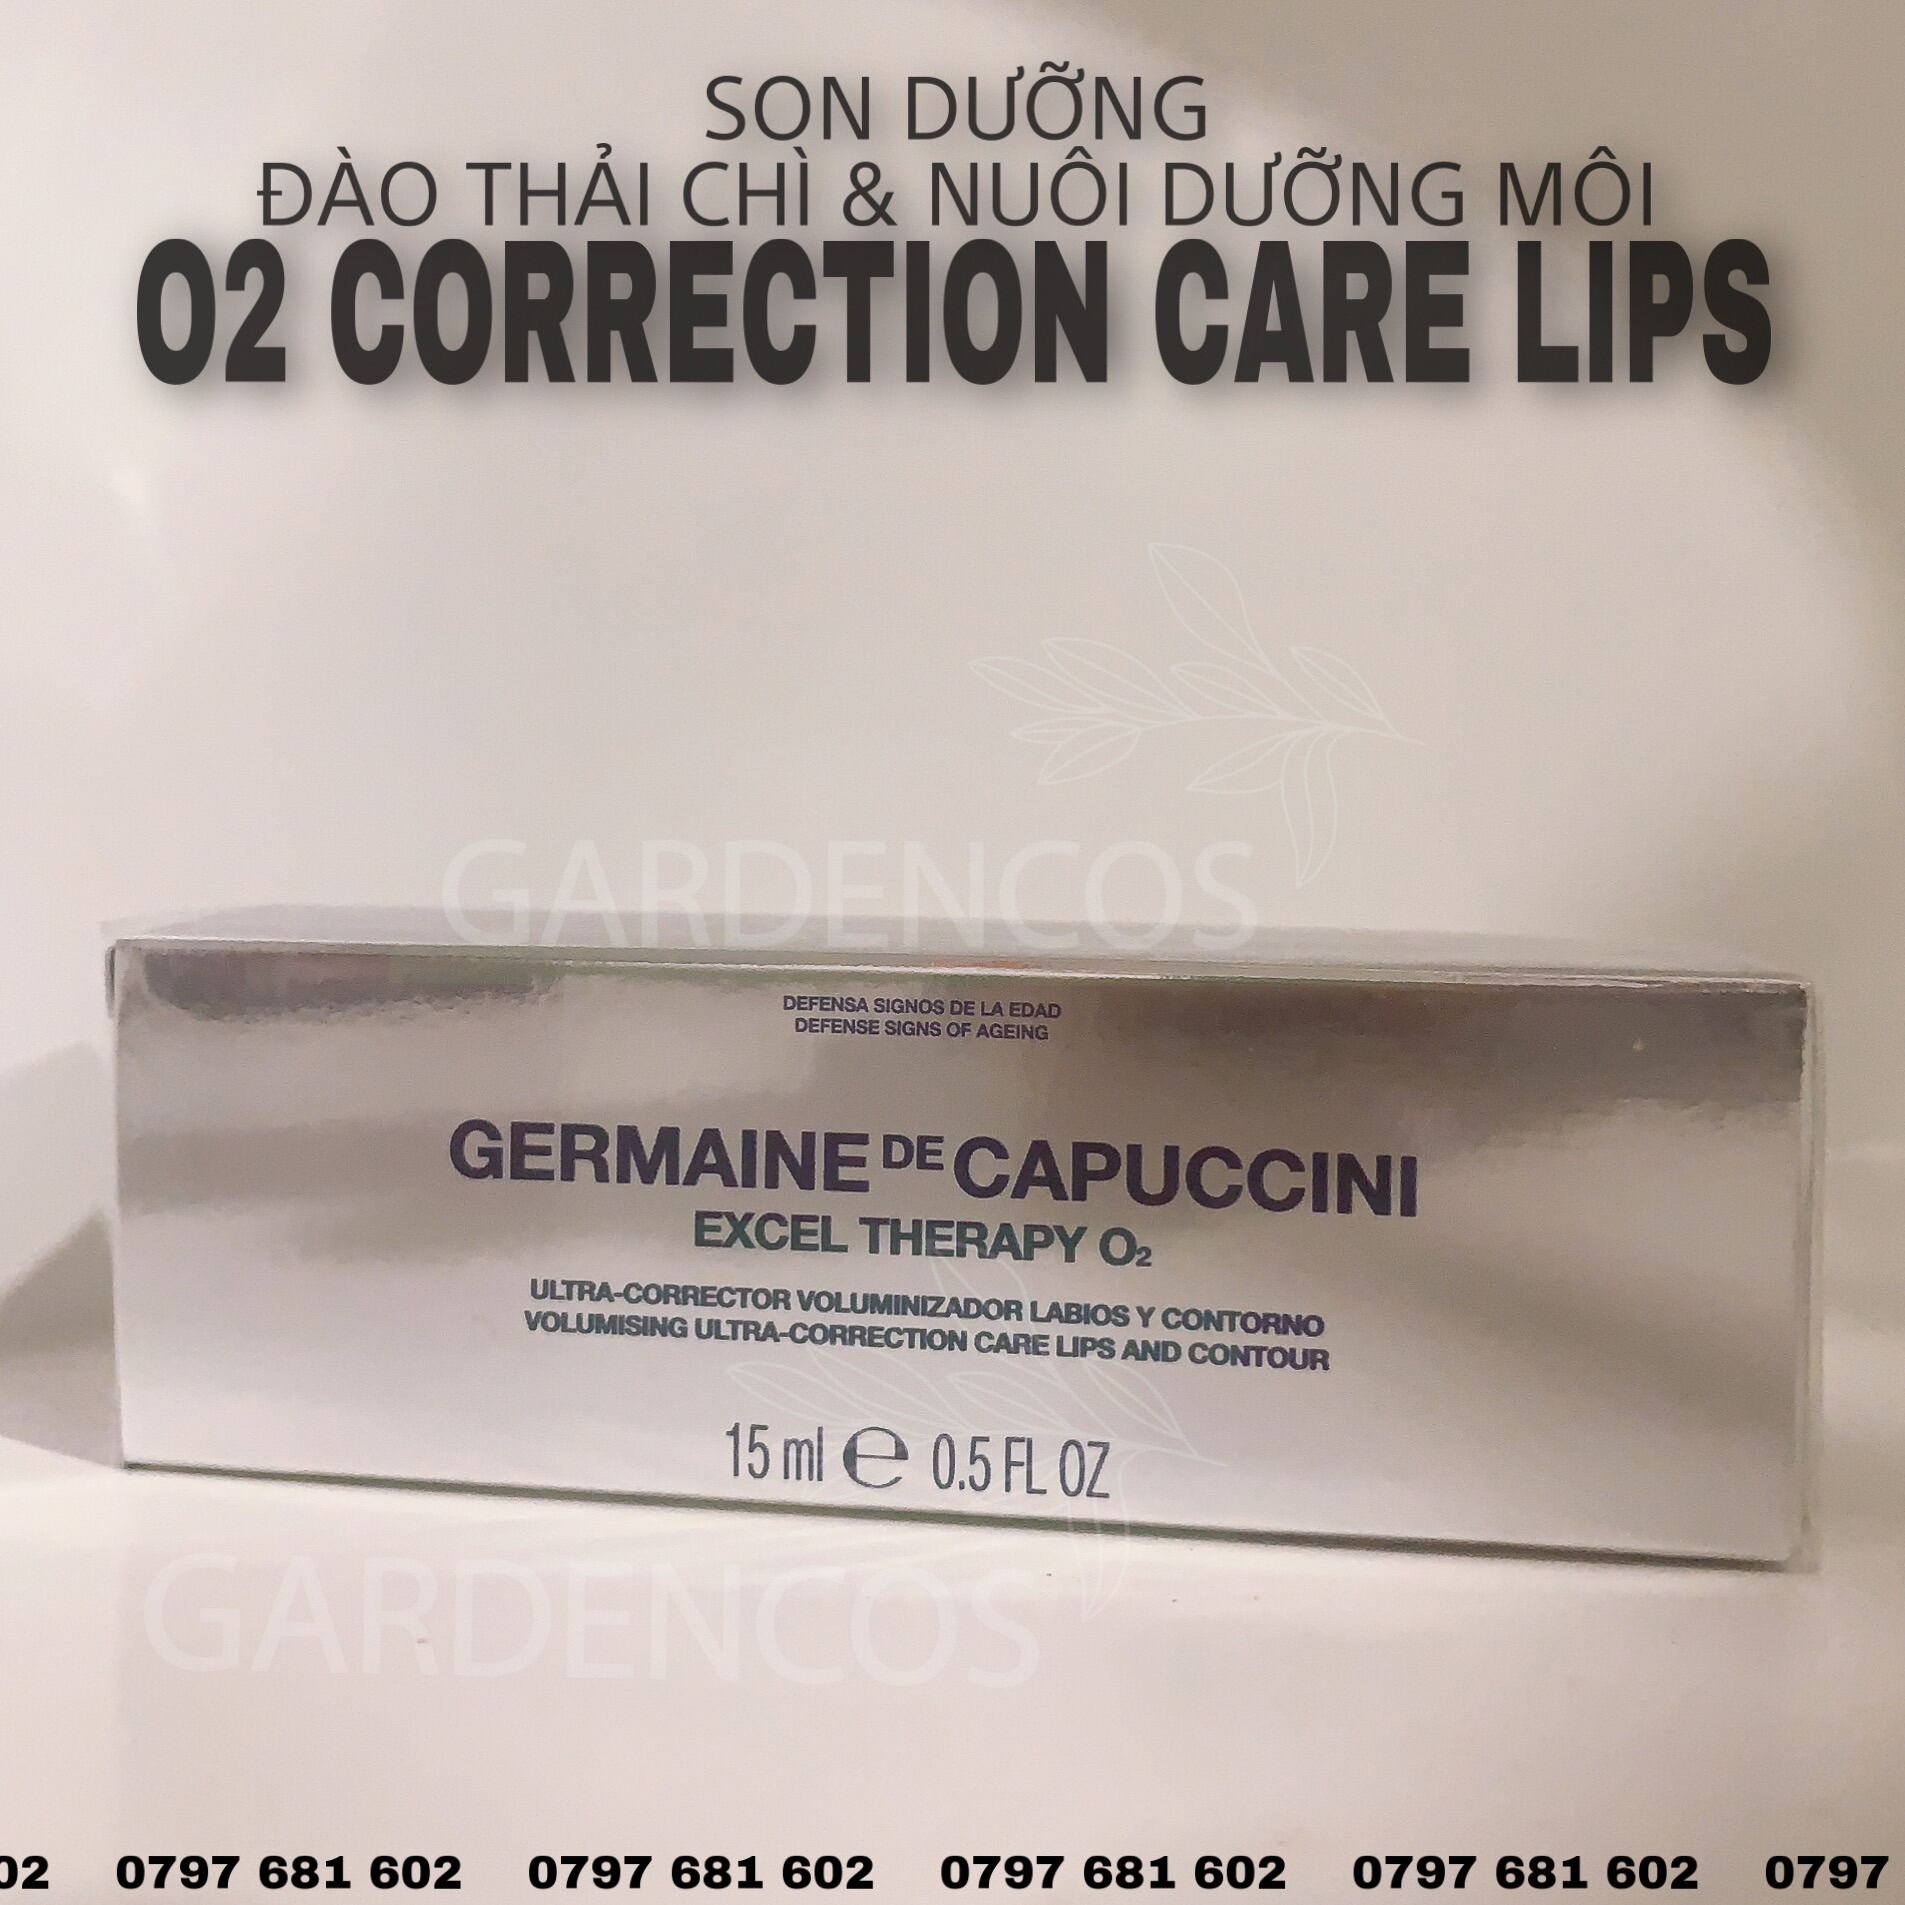 Son Dưỡng Môi Excel Therapy O2 Volumising Ultra-Conrrection Care Lips And Contour Germaine De Capuccini - Gardencos